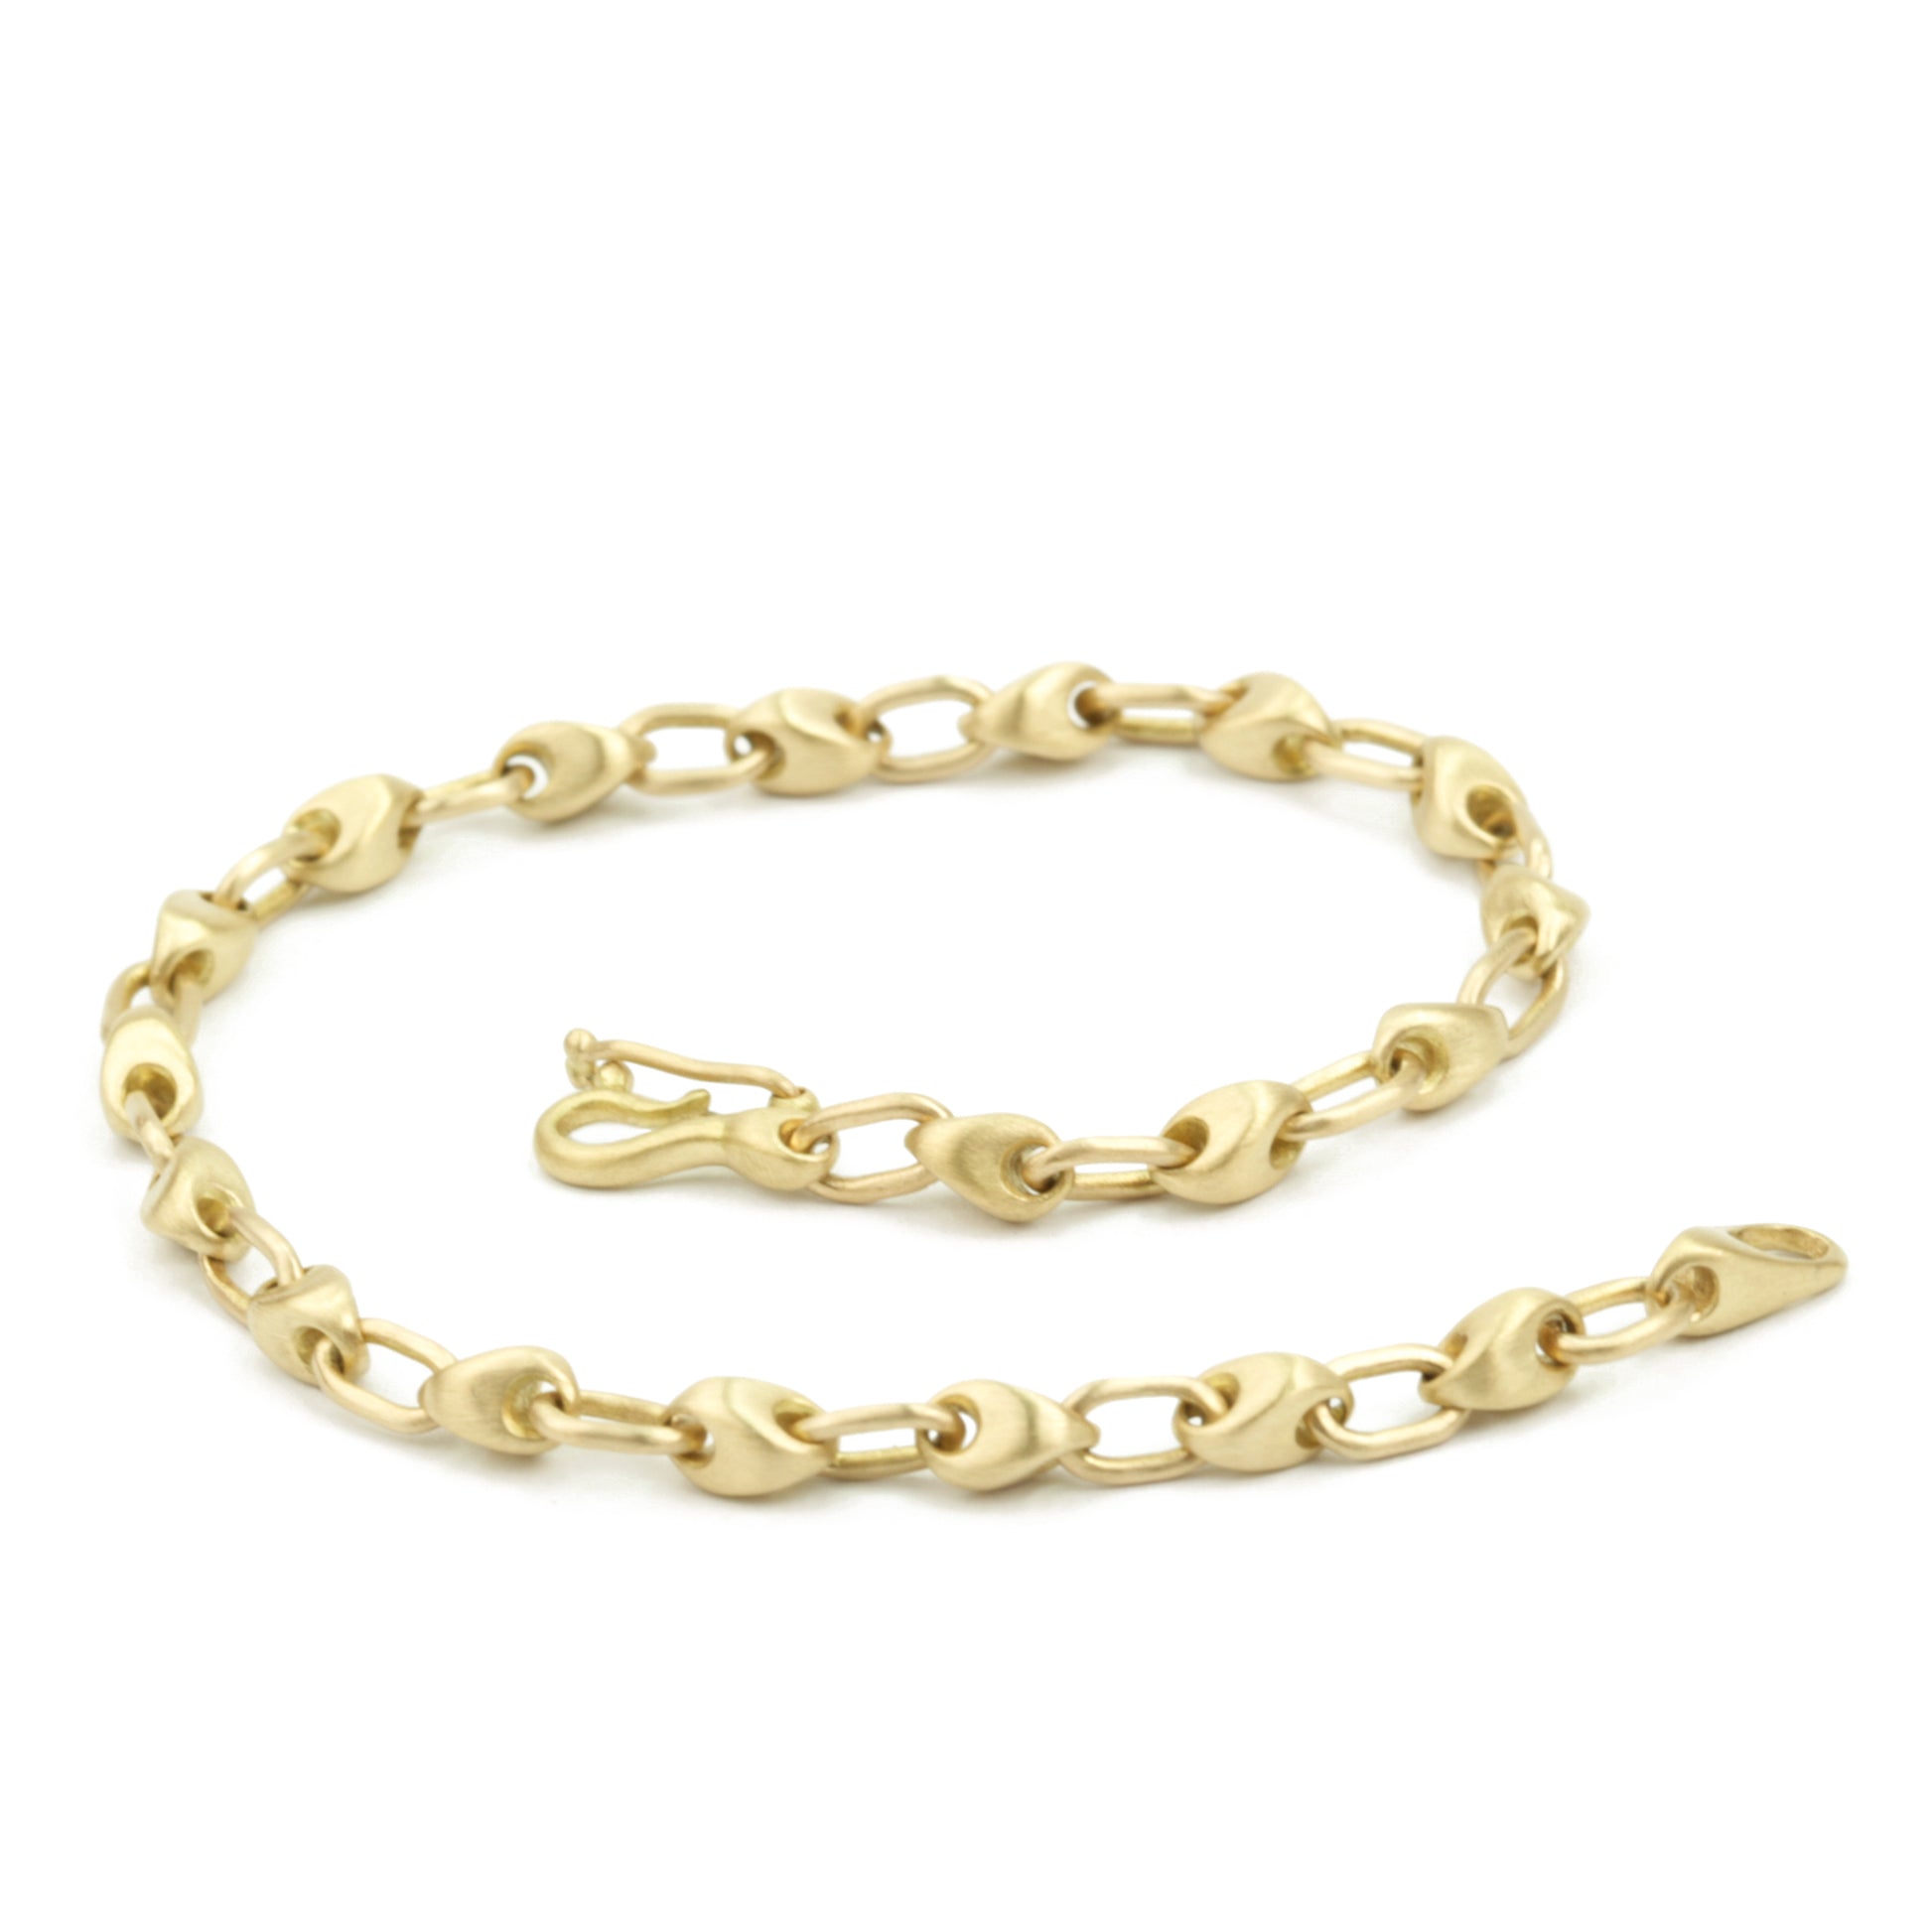 Pebble Chain Bracelet, coiled